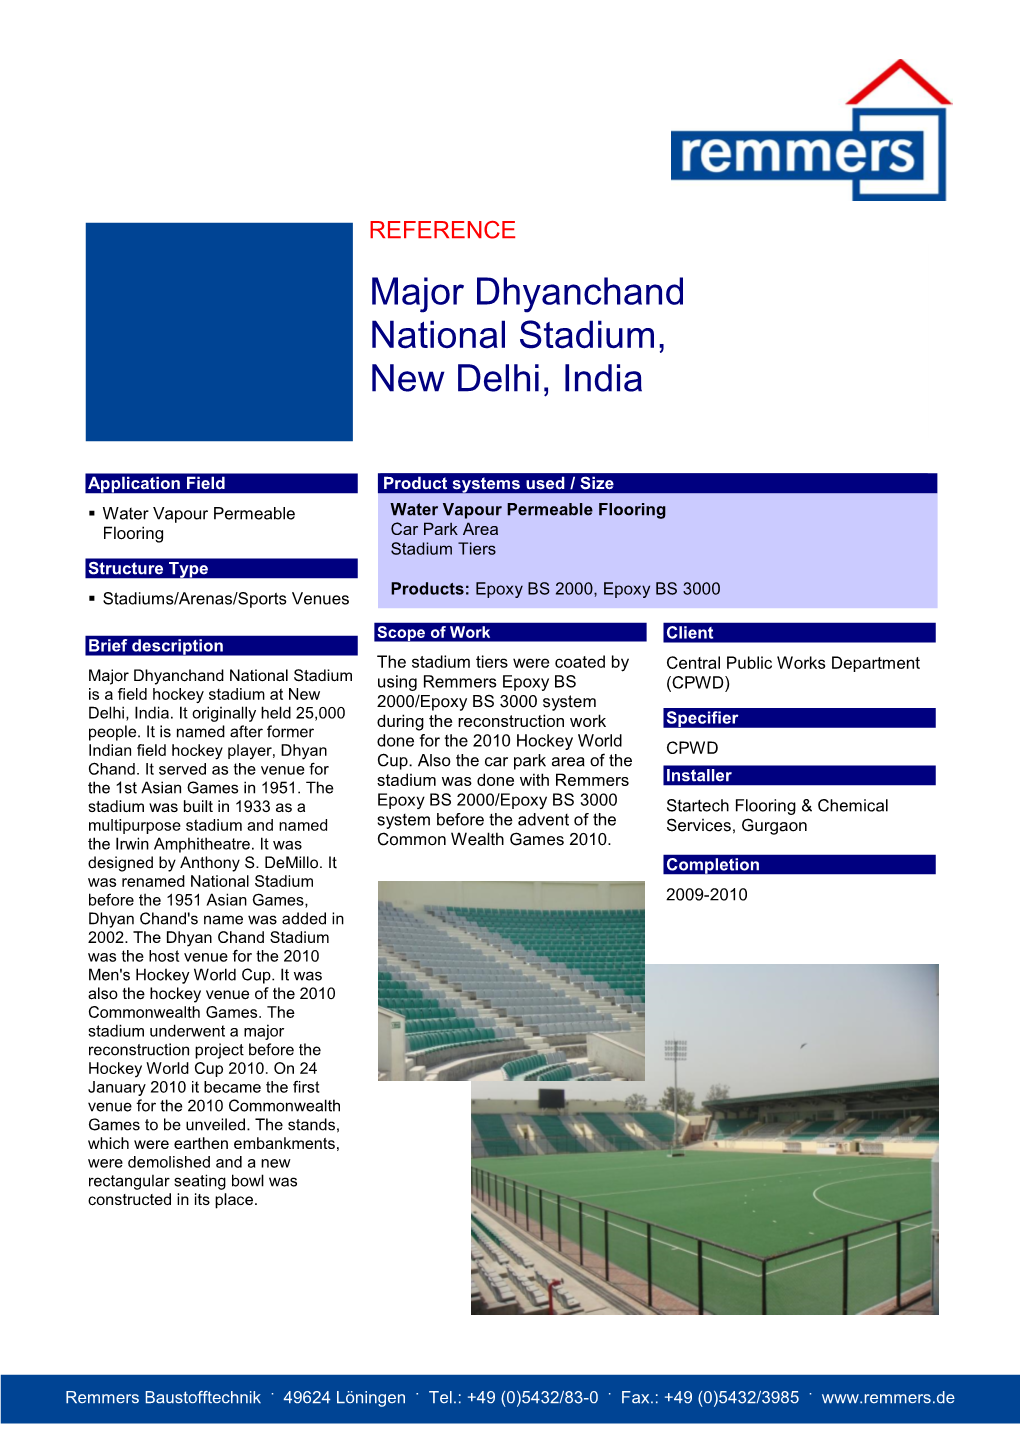 Major Dhyanchand National Stadium, New Delhi, India